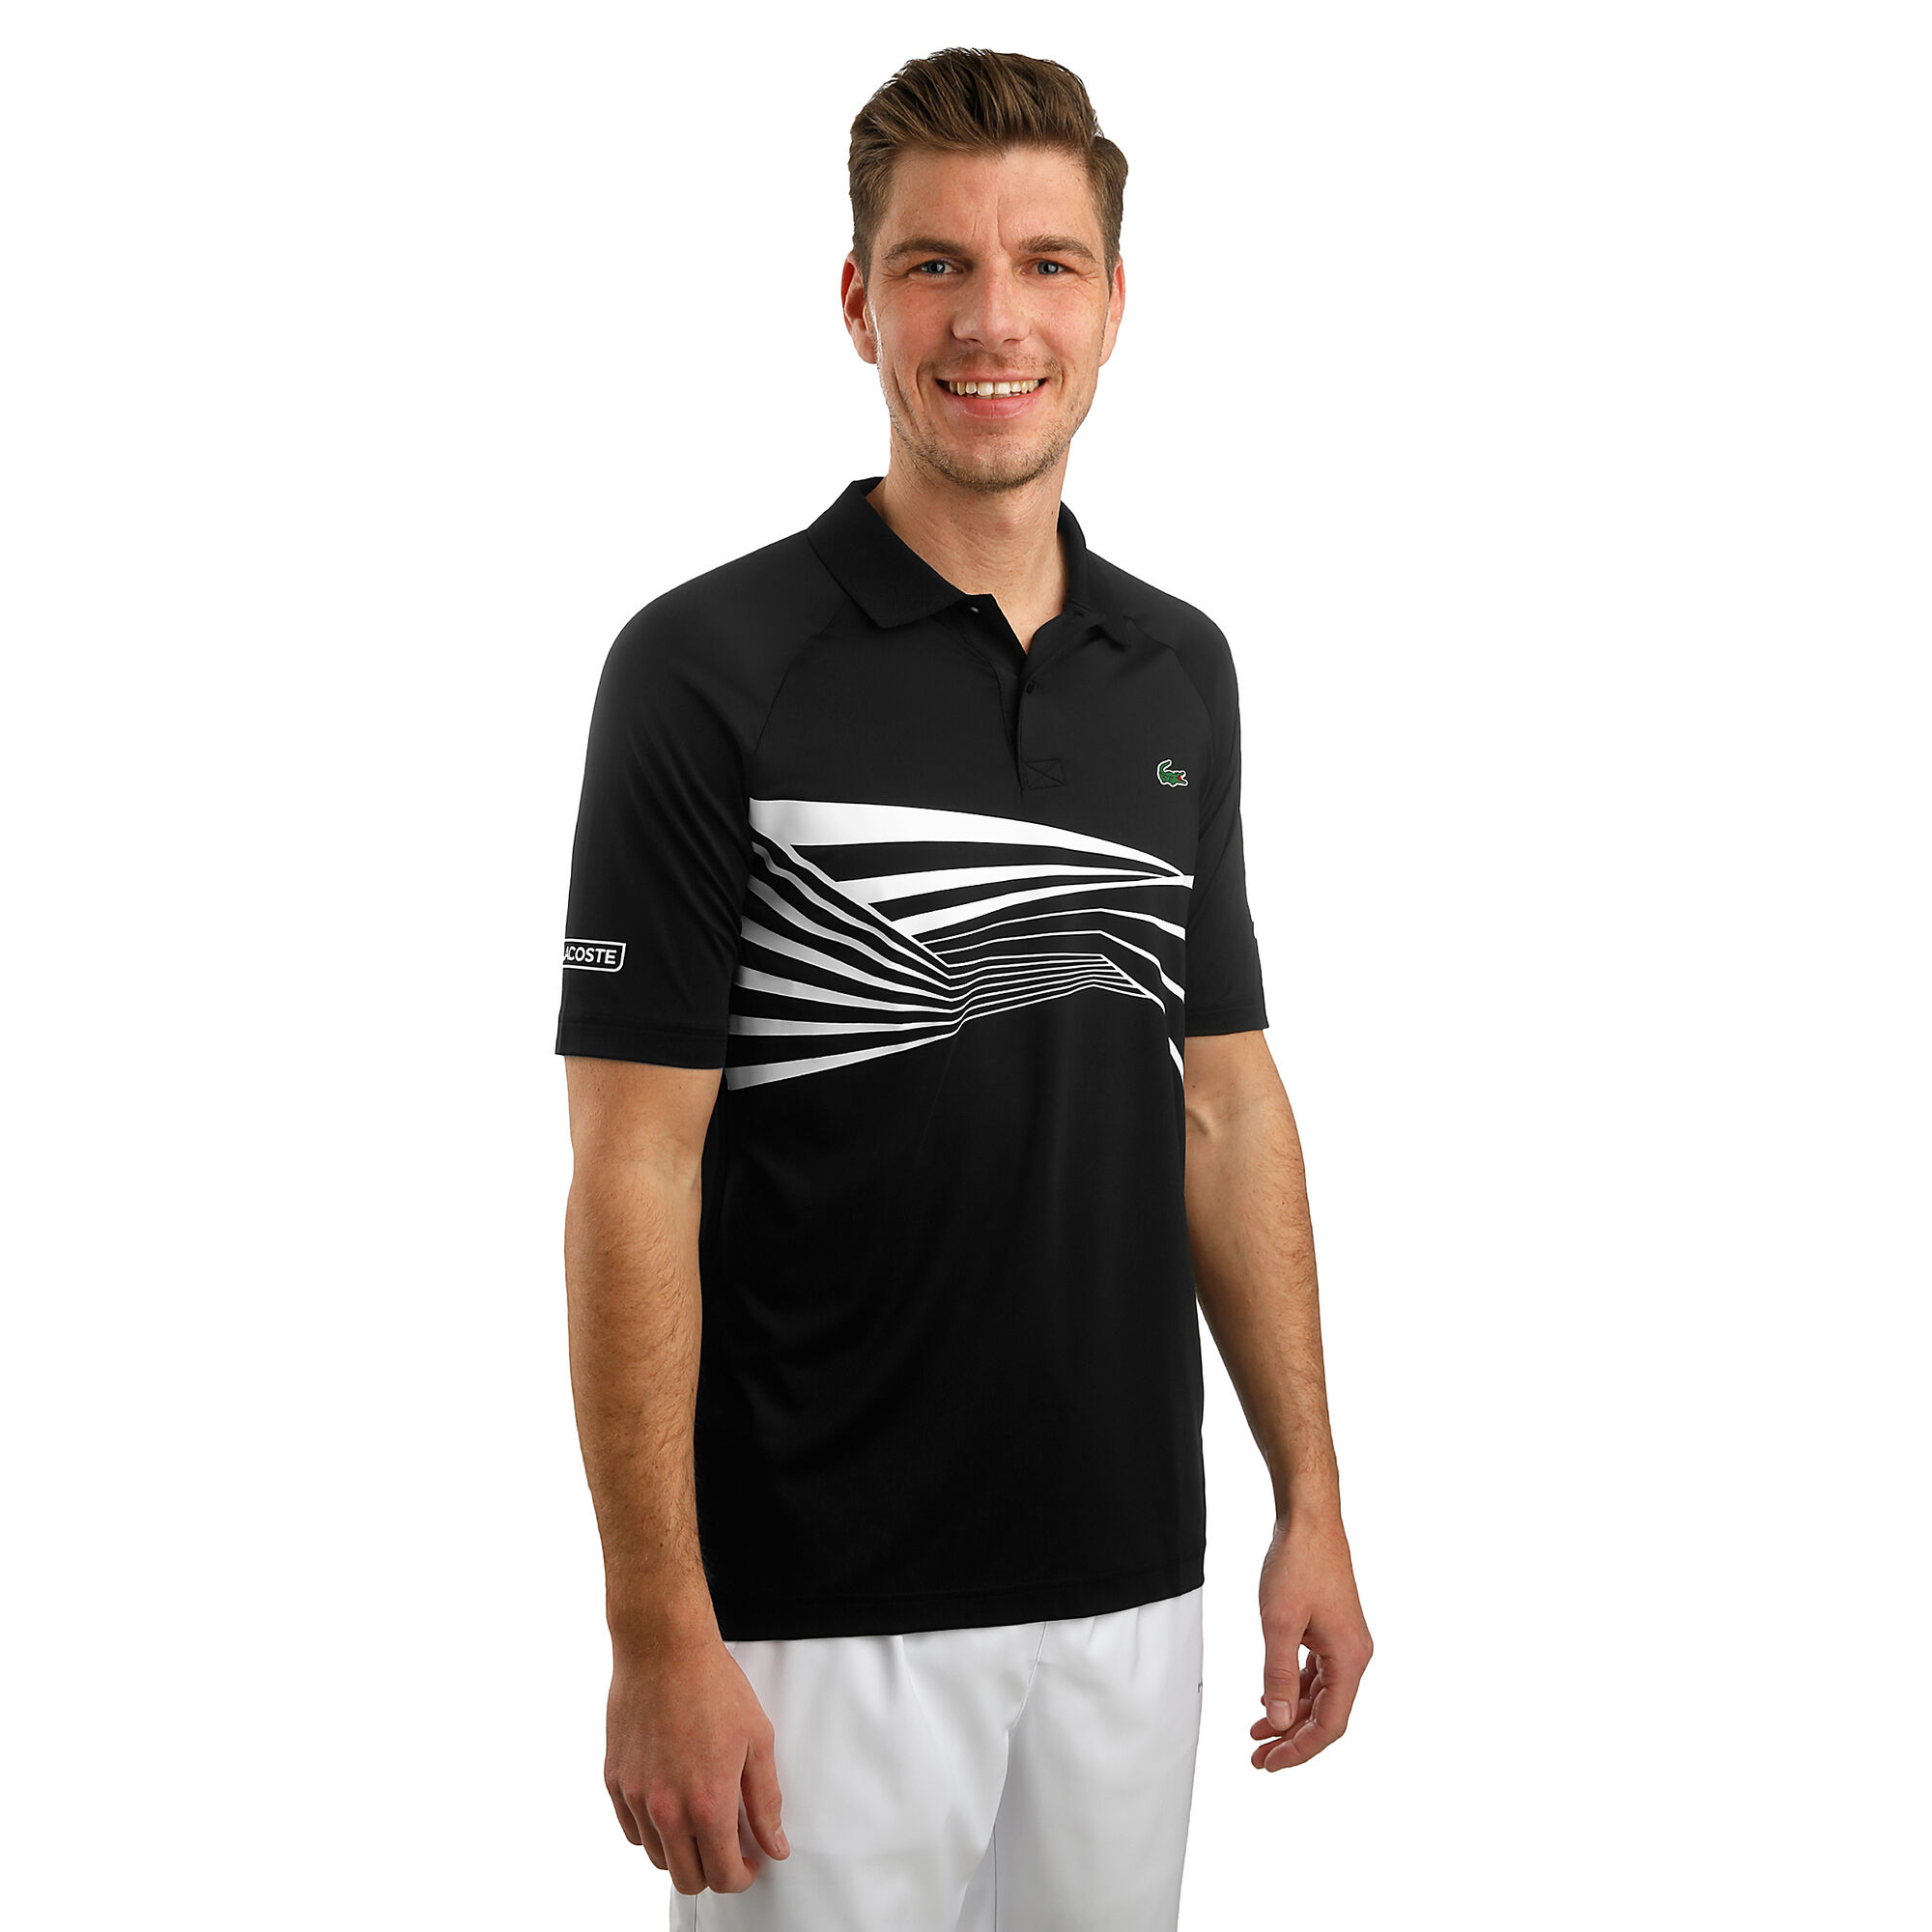 buy Lacoste Novak Djokovic Polo - Black, White online